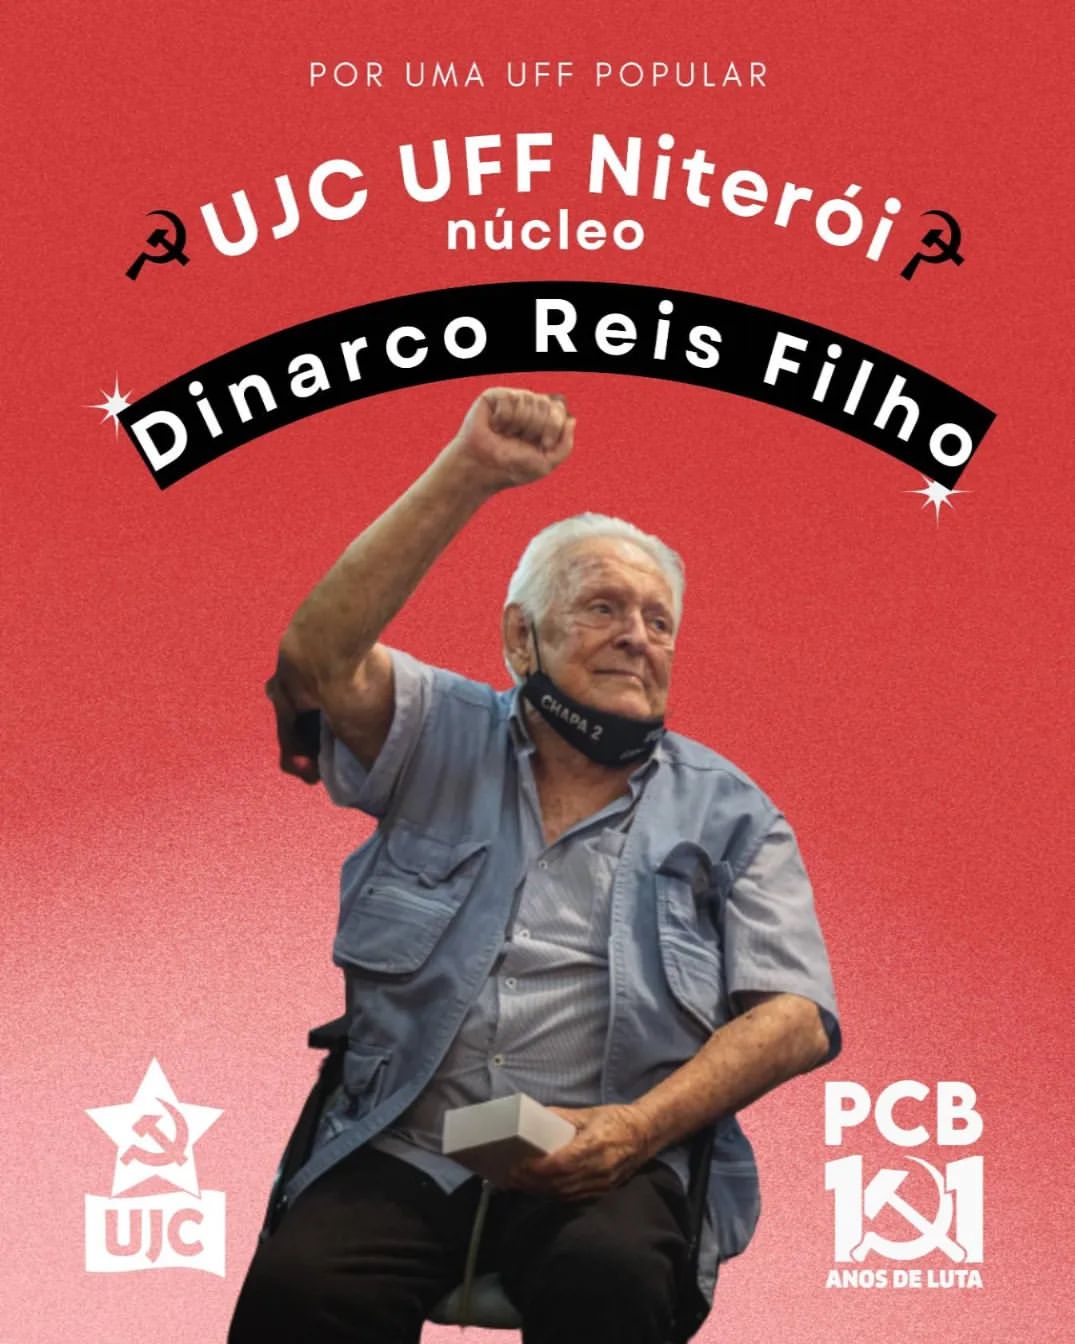 UJC UFF Niterói - núcleo Dinarco Reis Filho